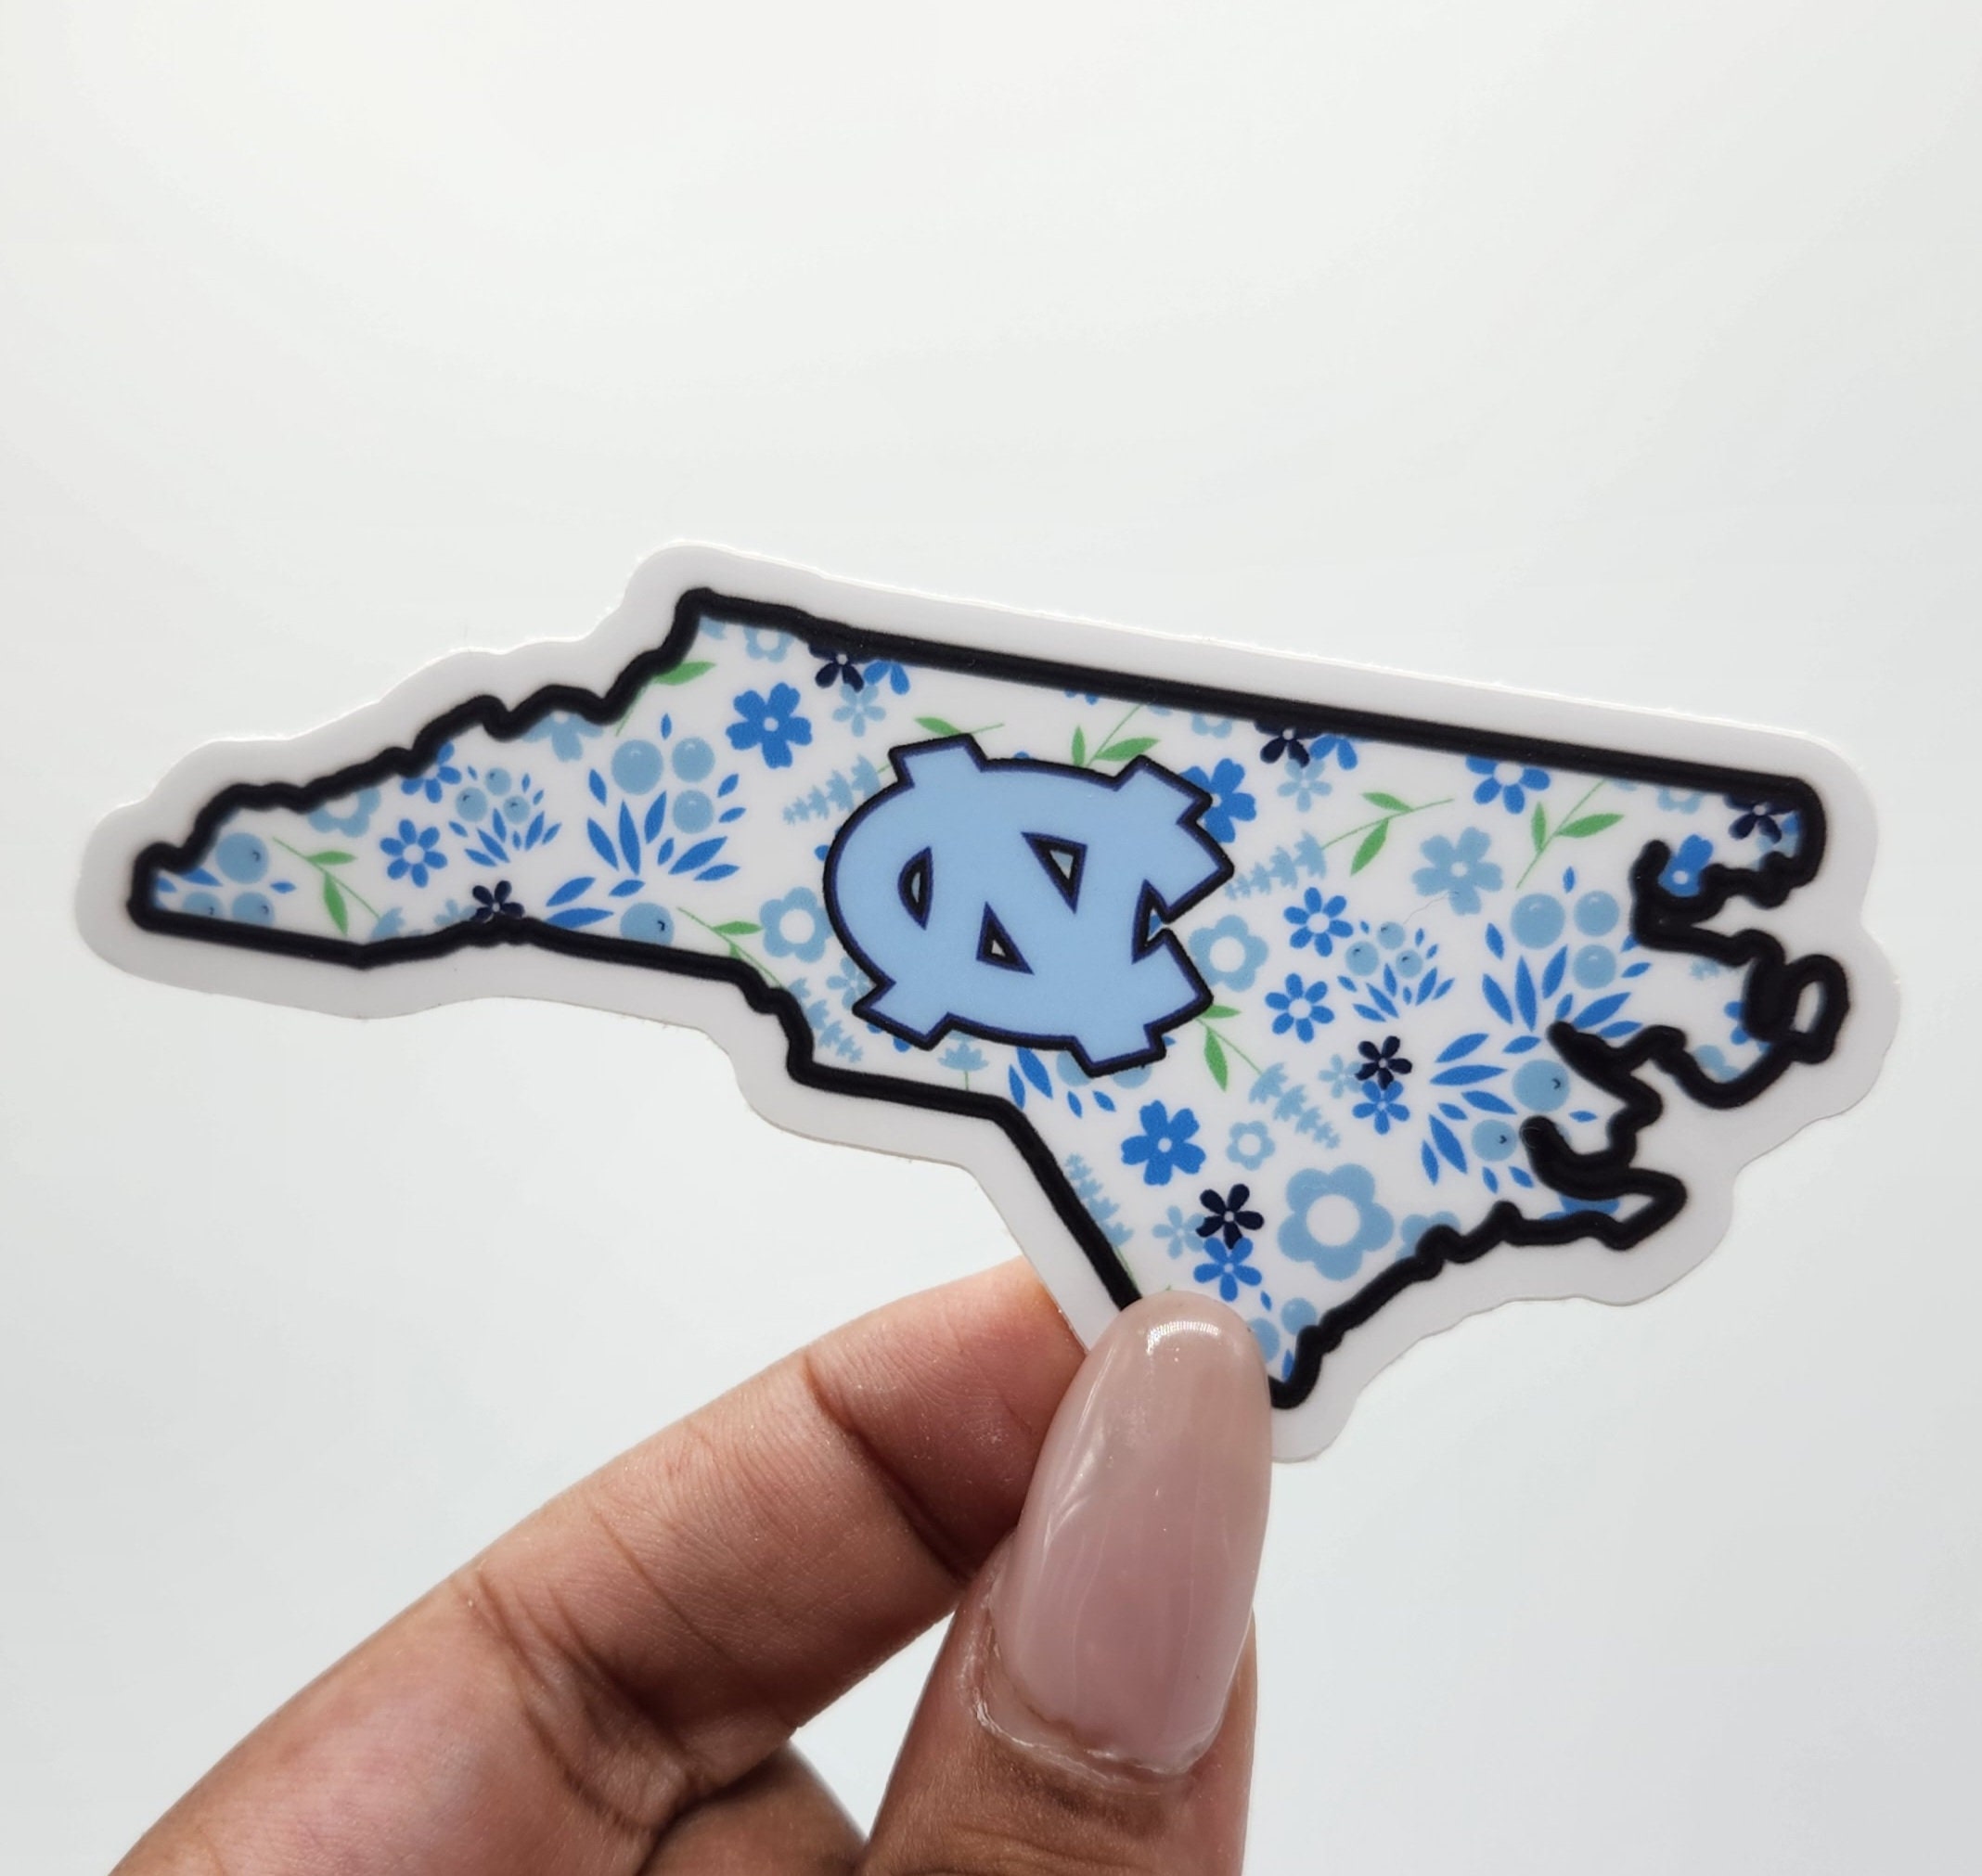 UNC University of North Carolina Tar Heels Logo Iron On Patch Nike NCAA Blue